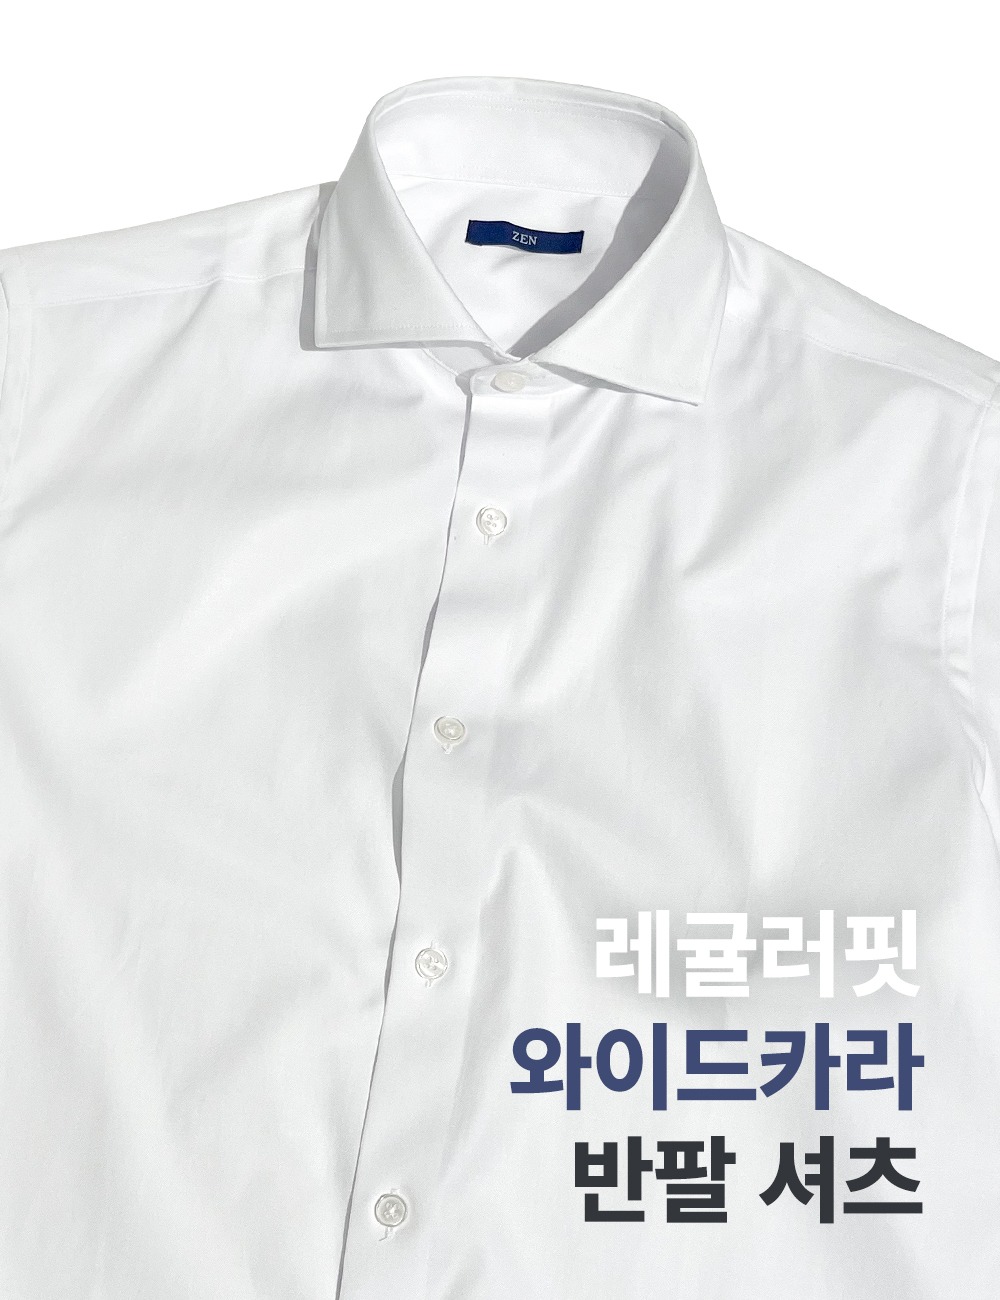 ZEN 레귤러핏 와이드카라 반팔 드레스 셔츠